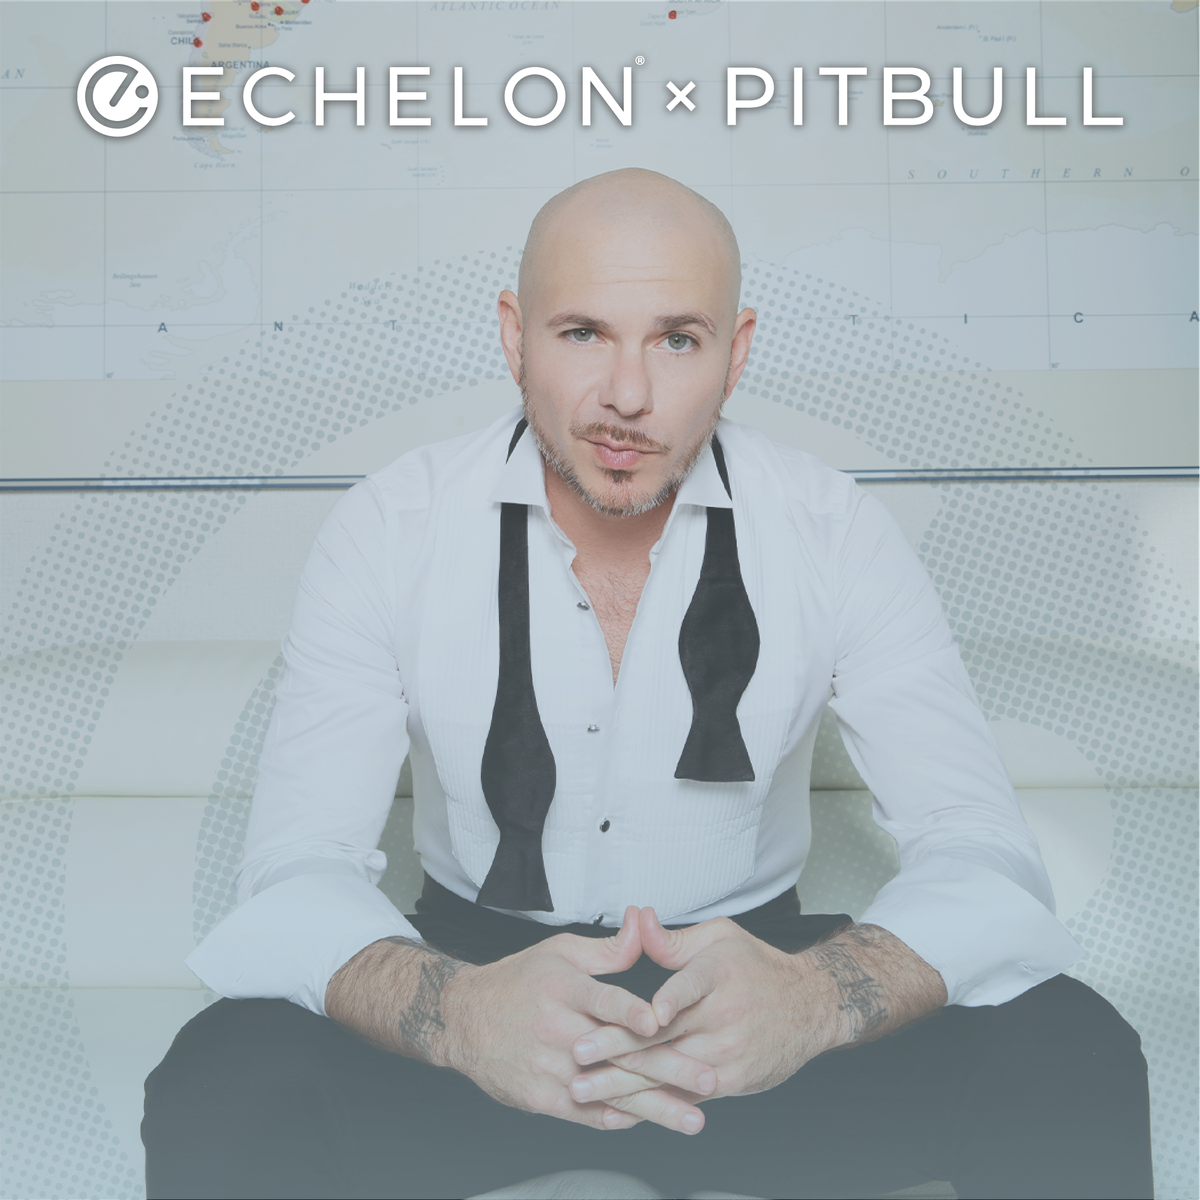 Pitbull sitting in front of an Echelon logo